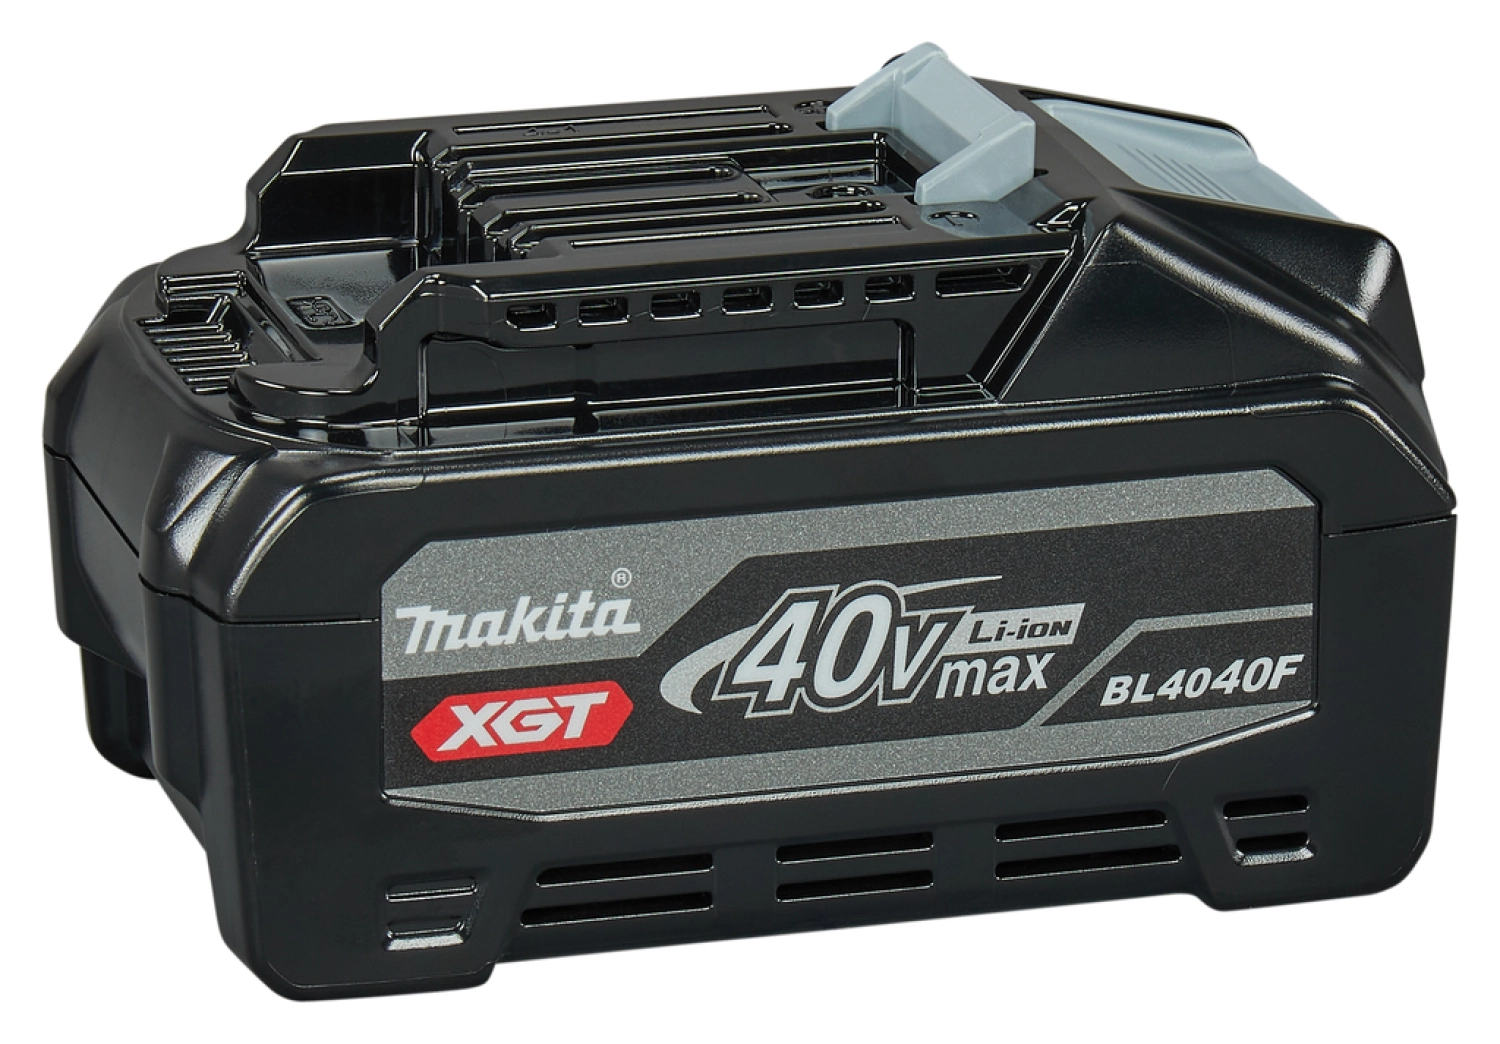 Makita BL4040F 40V XGT Max Li-Ion batterie- 4,0Ah